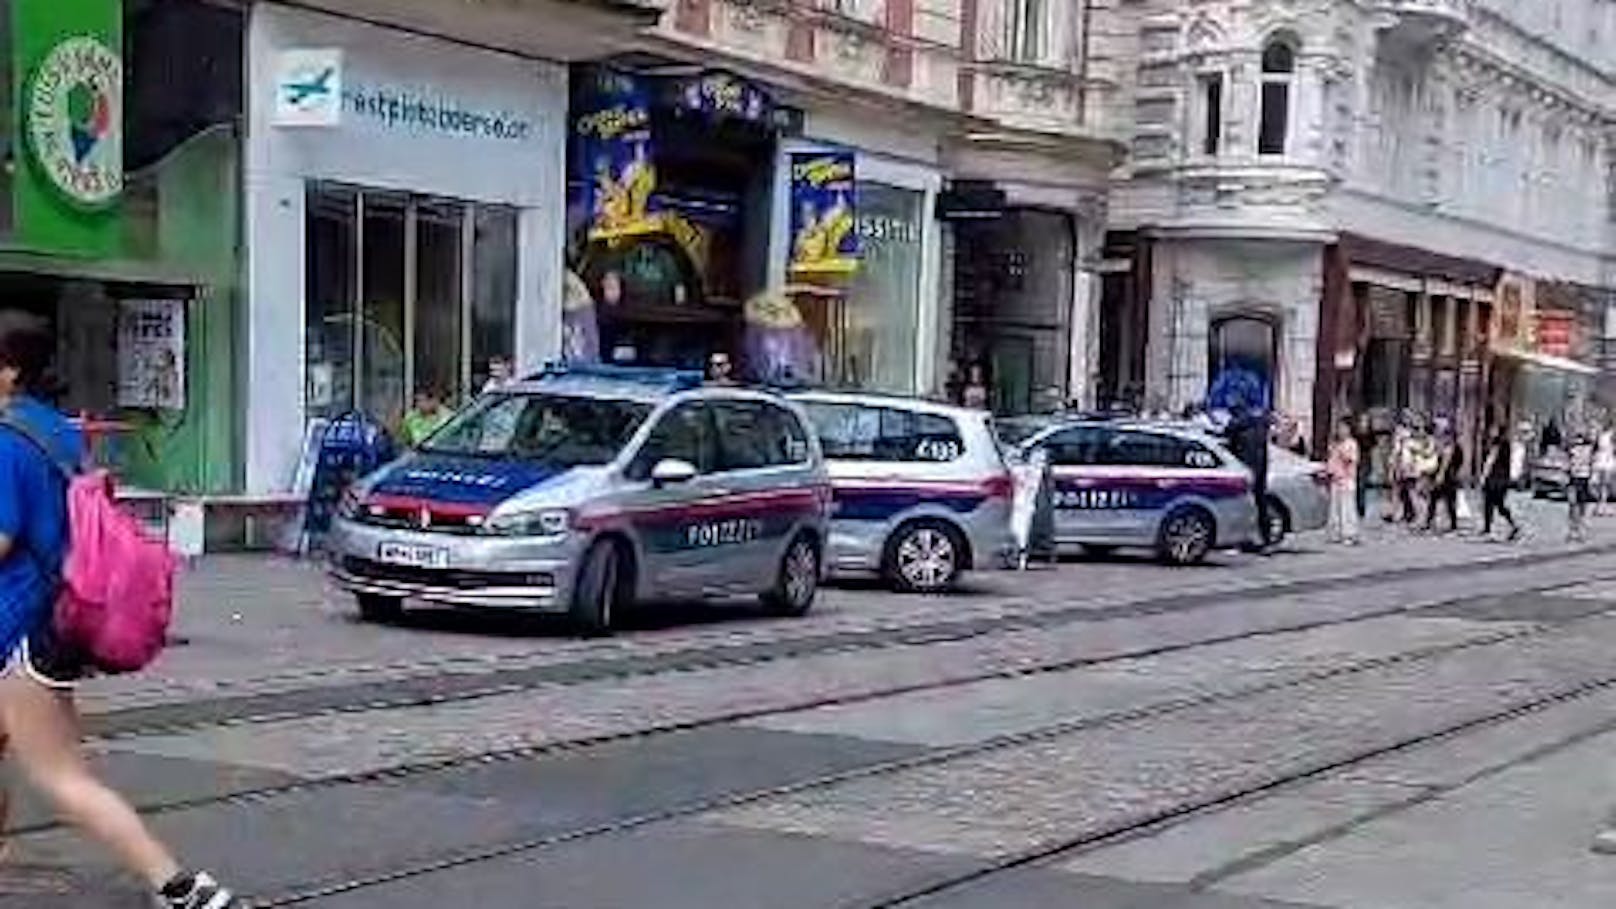 Schüsse in Grazer Innenstadt – zwei Personen tot